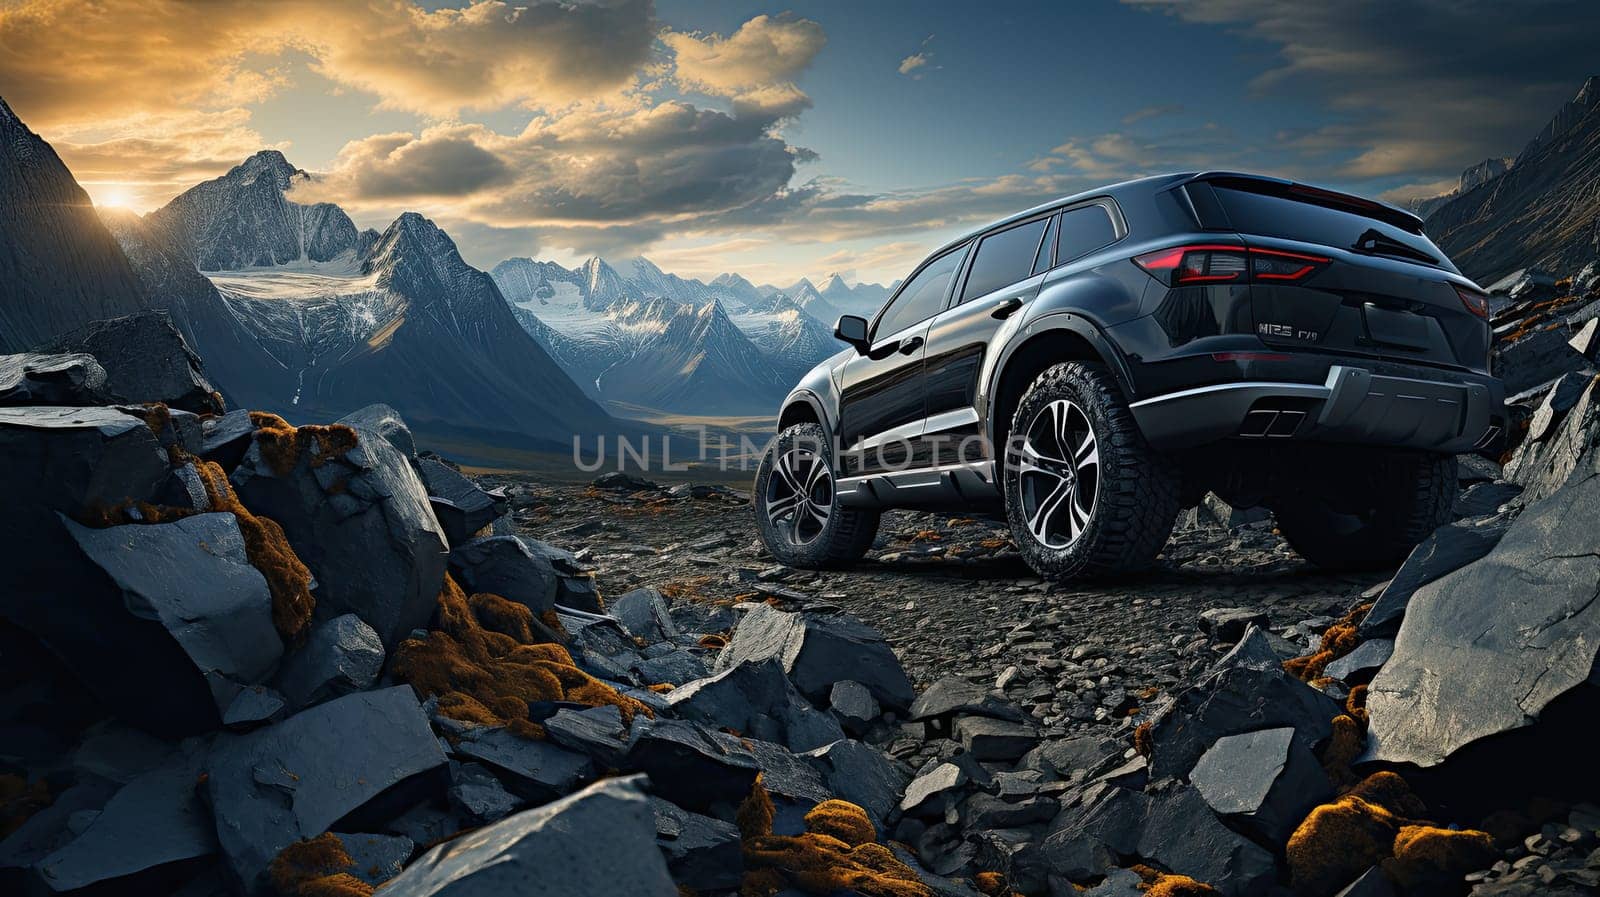 SUV car on top of mountain with beautiful scenery, closeup wheel, Generate Ai